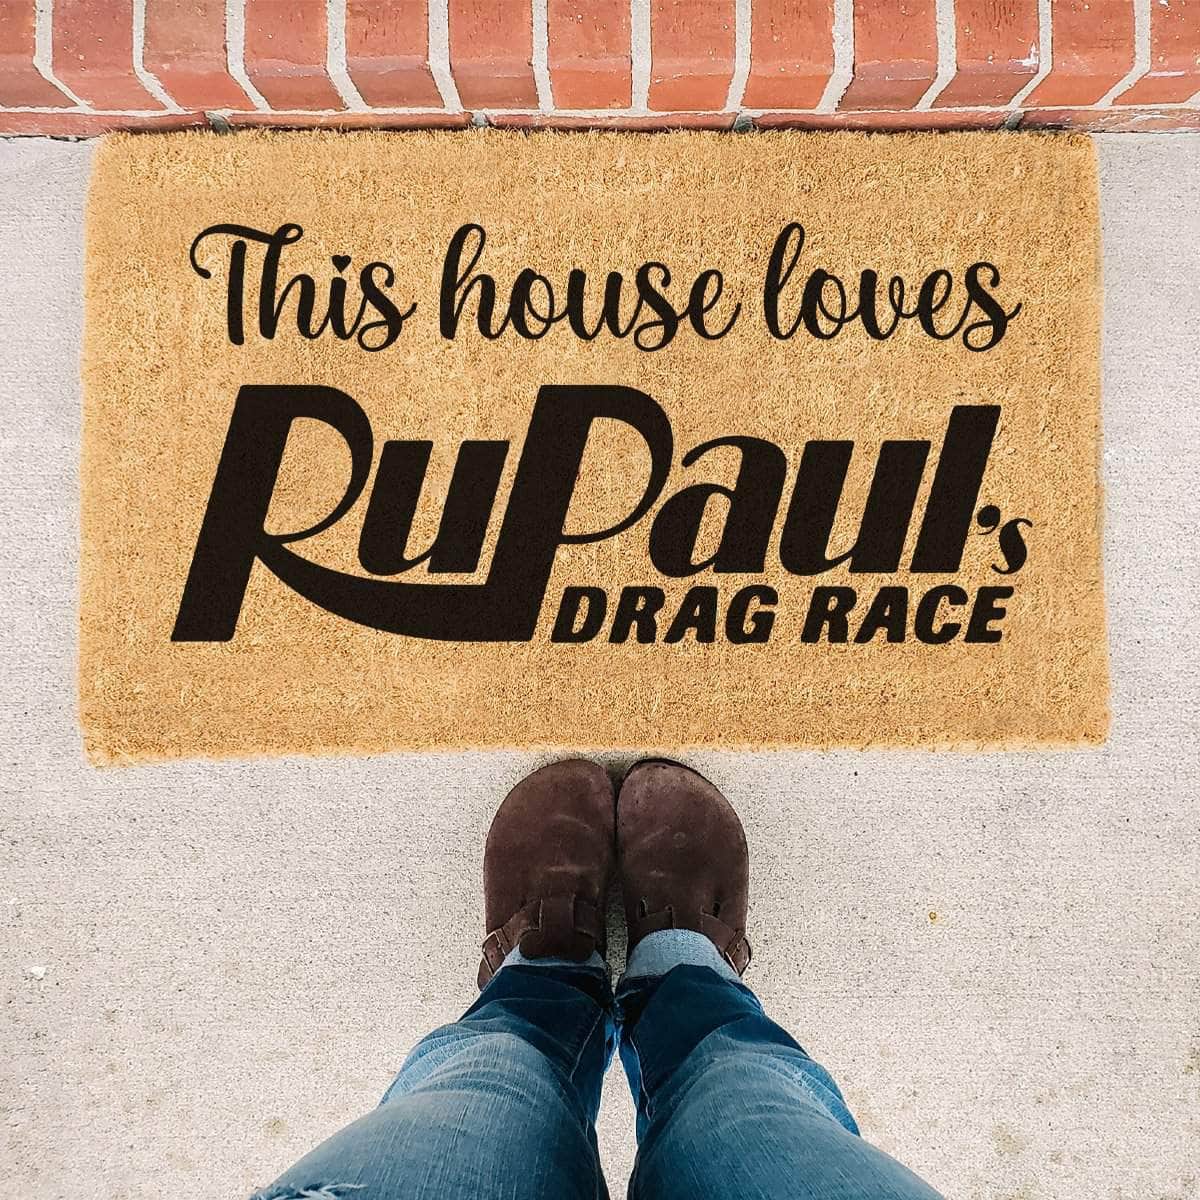 This House Loves RuPaul's Drag Race - Doormat